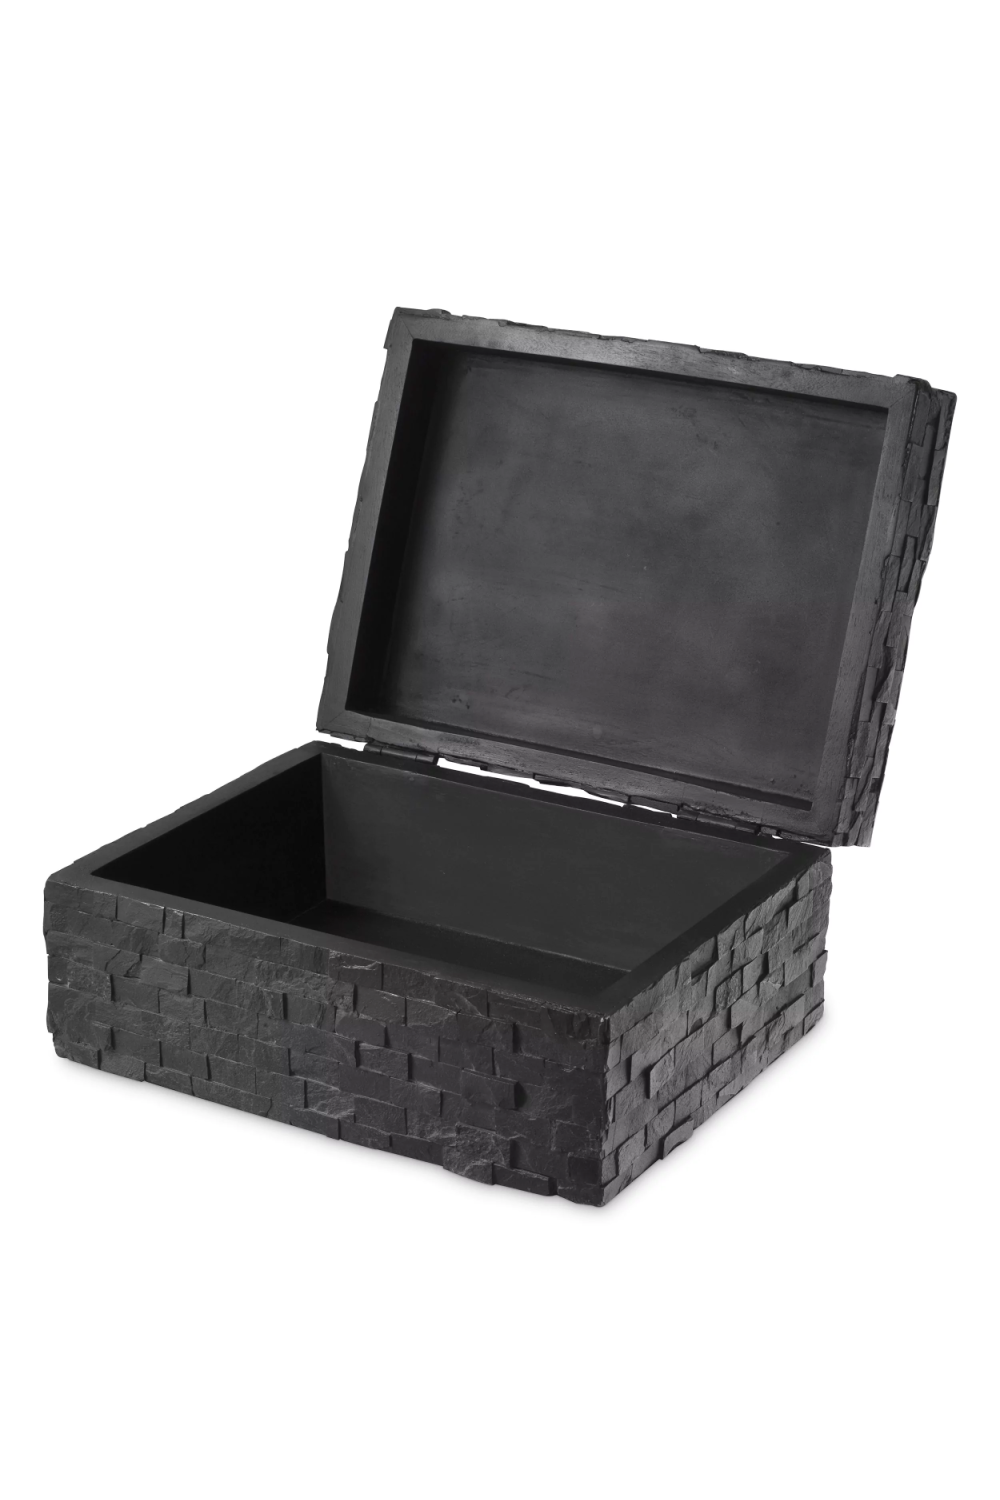 NEW Eichholtz Vivienne Silver Large + Small Storage Boxes, Set of 2.  Original Price: $817